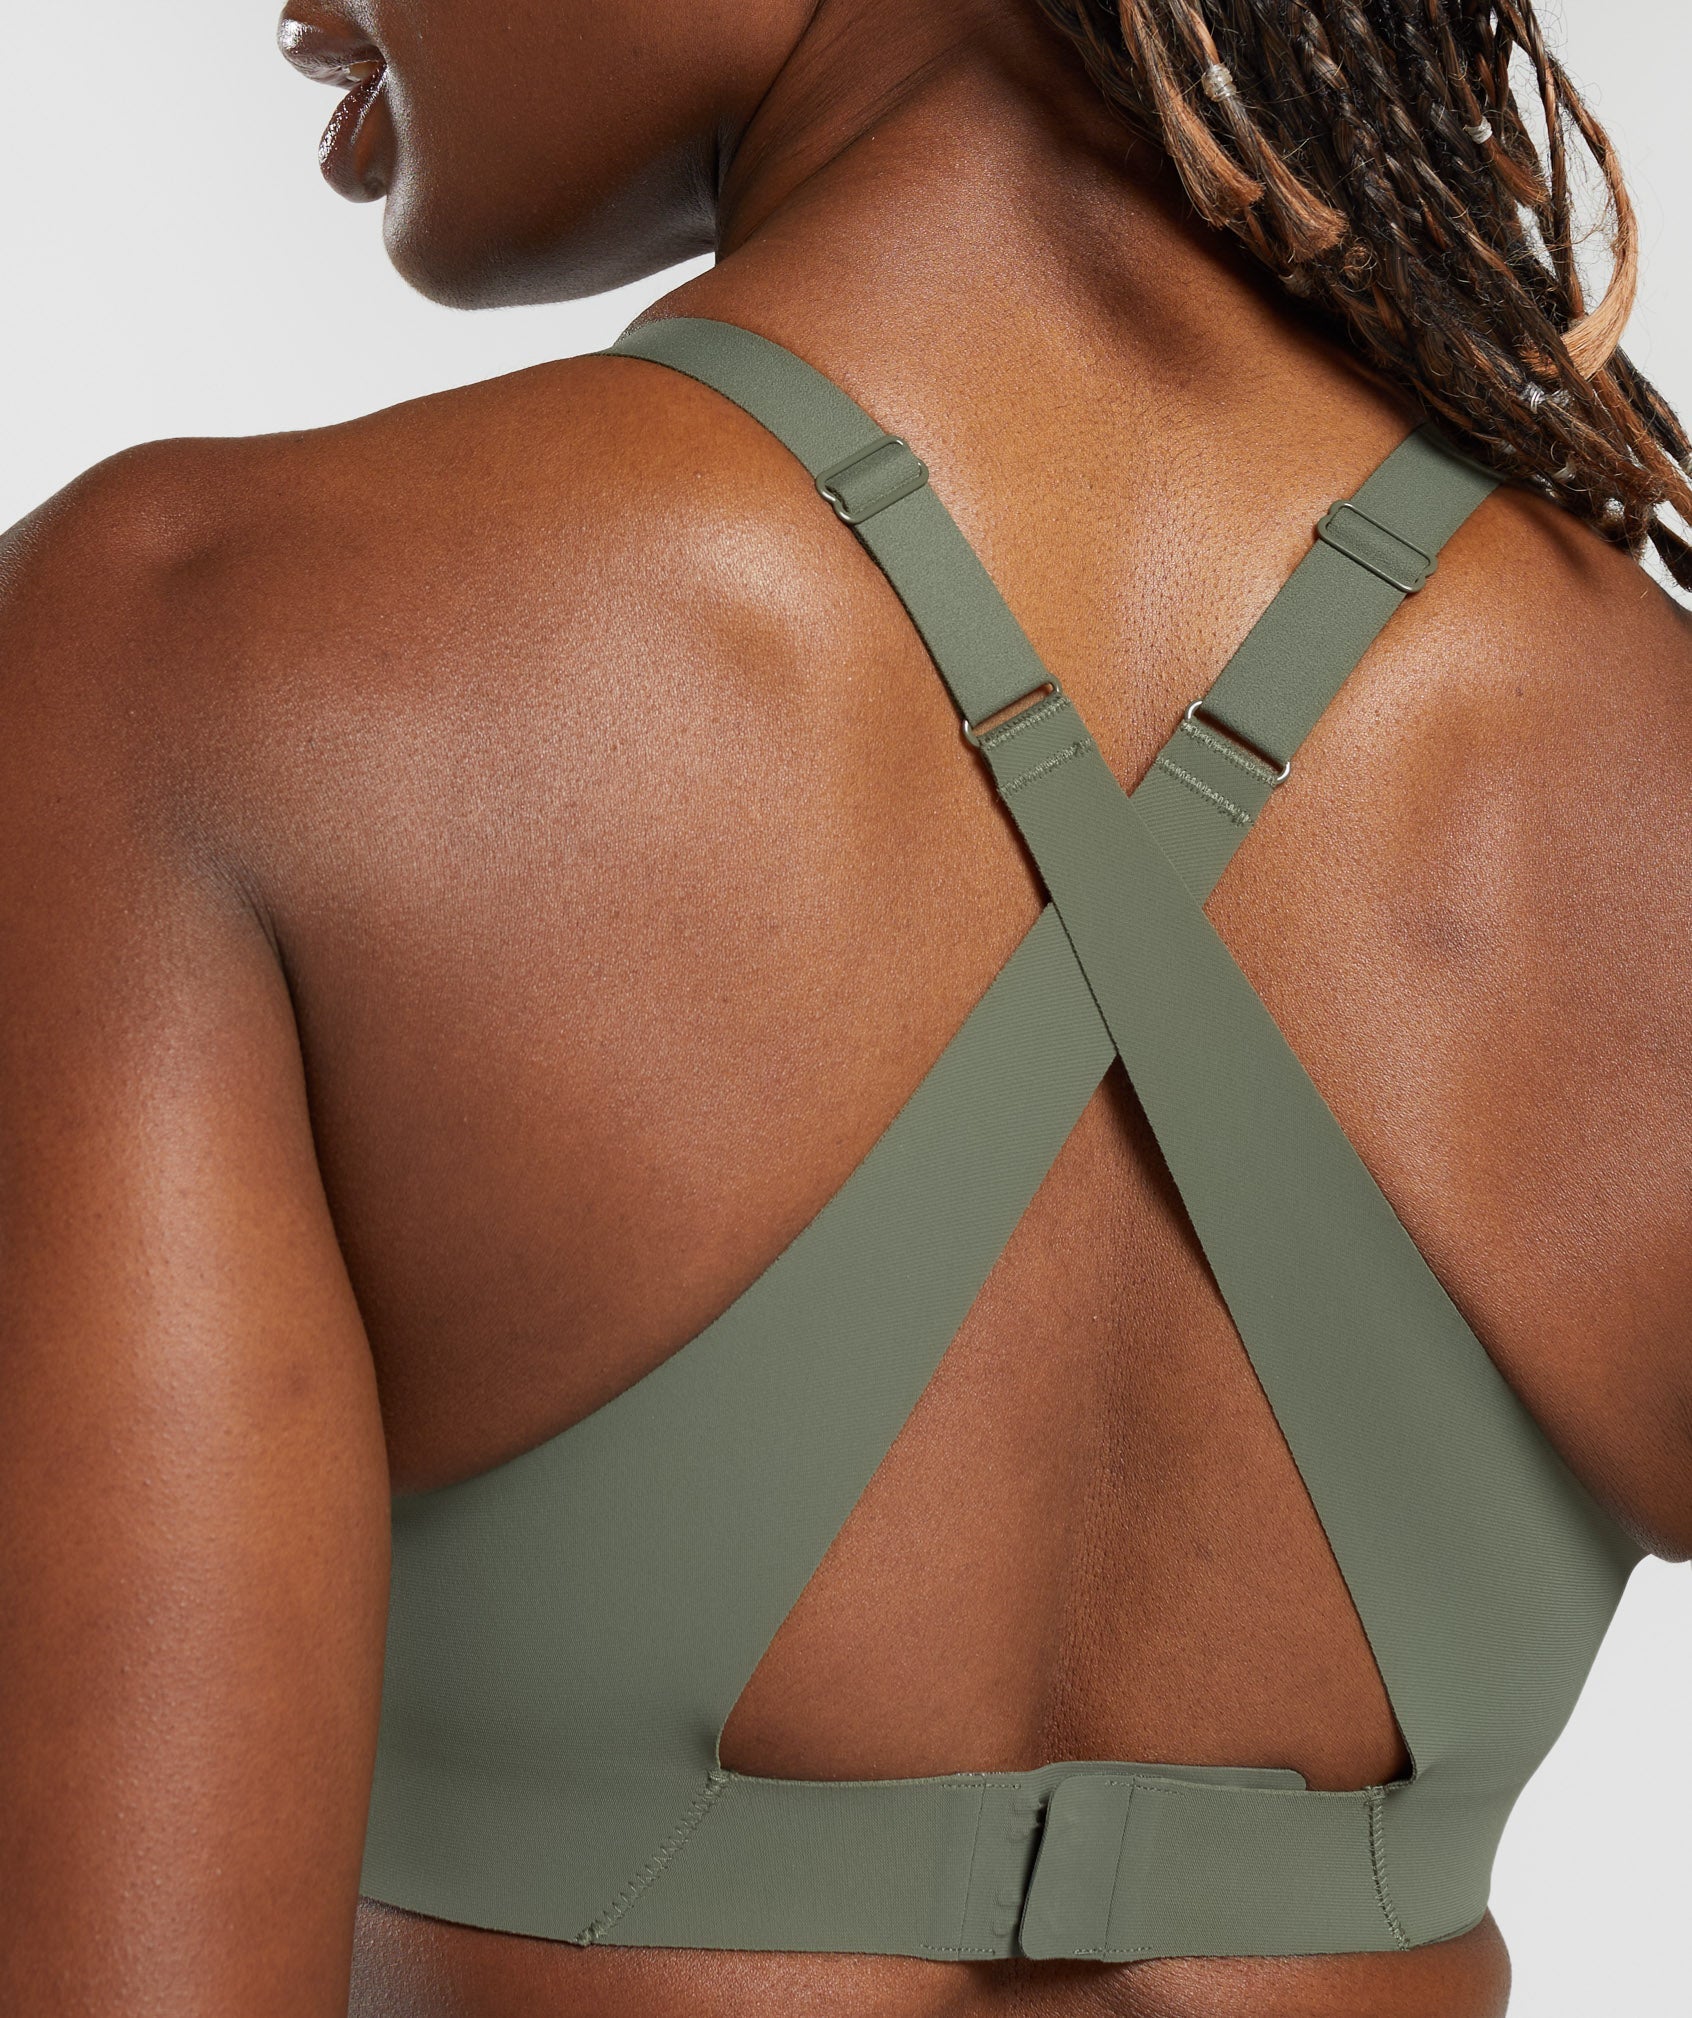 Nike cross back adjustable strap sports bra